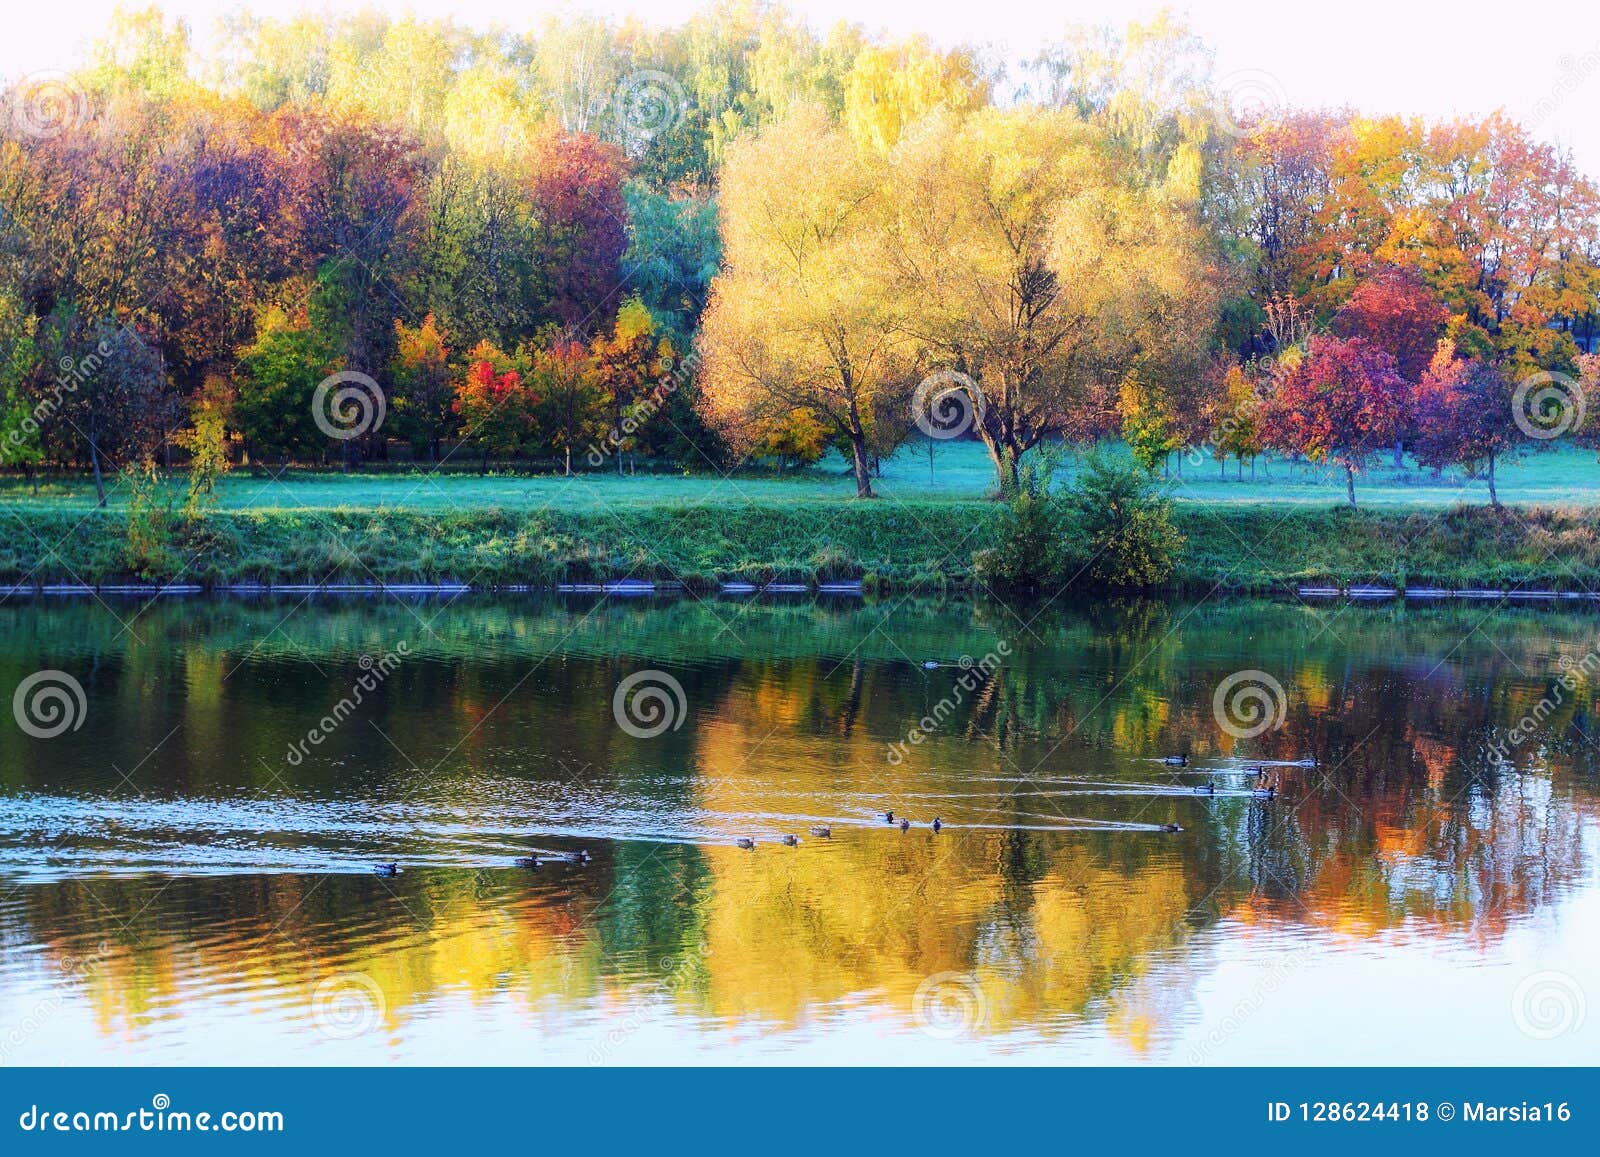 Colorful Autumn Landscape Stock Photo Image Of Plants 128624418